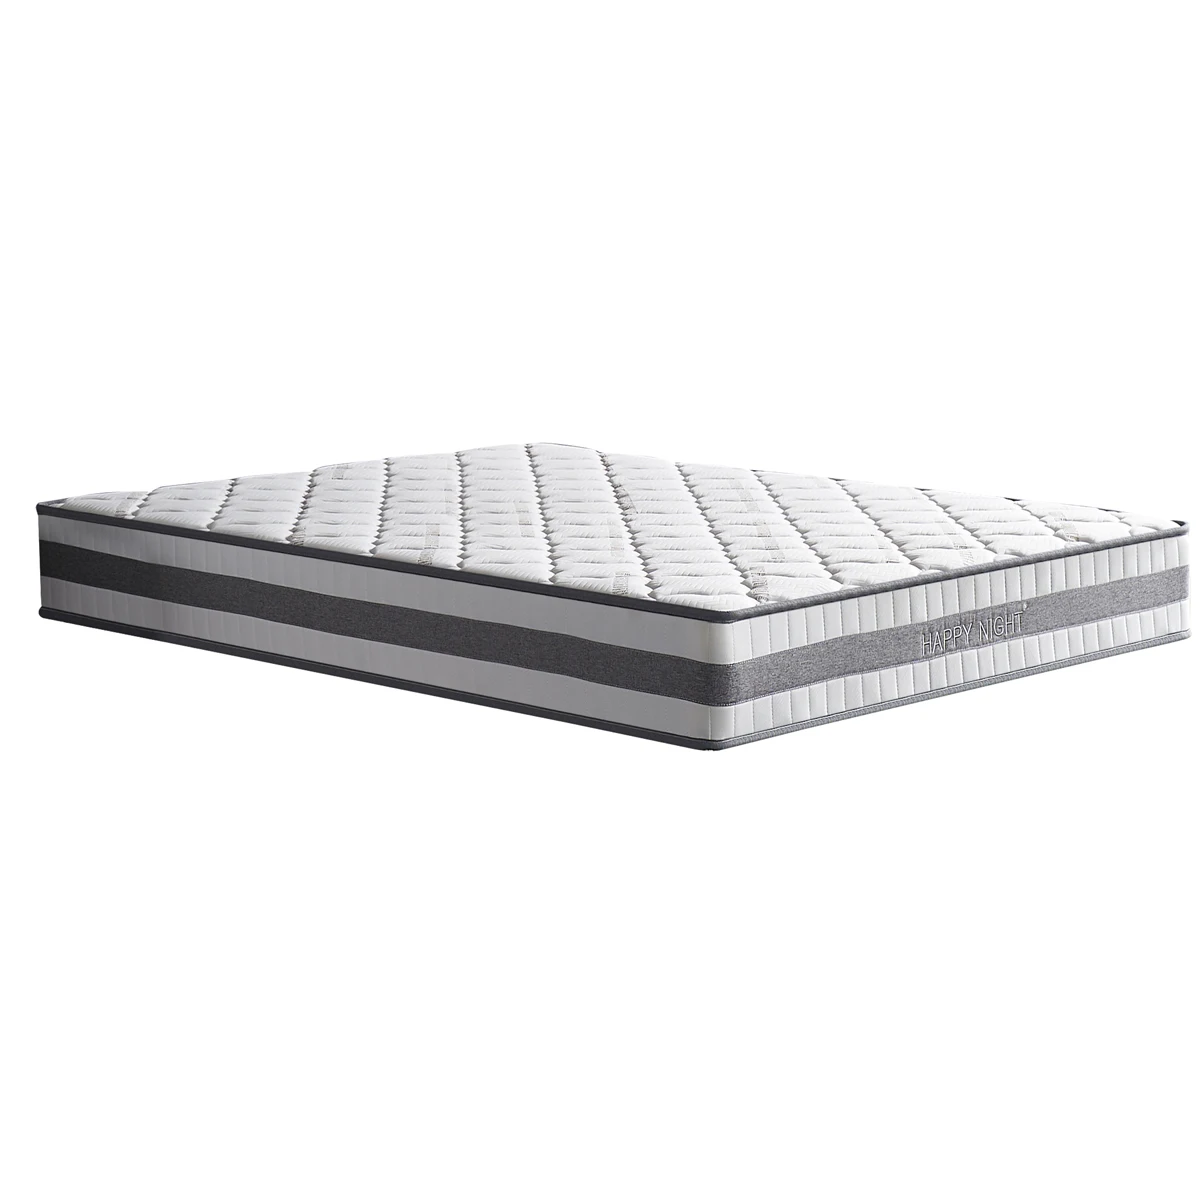 

Hypo-allergenic foam 5 star hotel pocket spring bed mattress fabric mattress roll pocket coil spring mattress for hotels